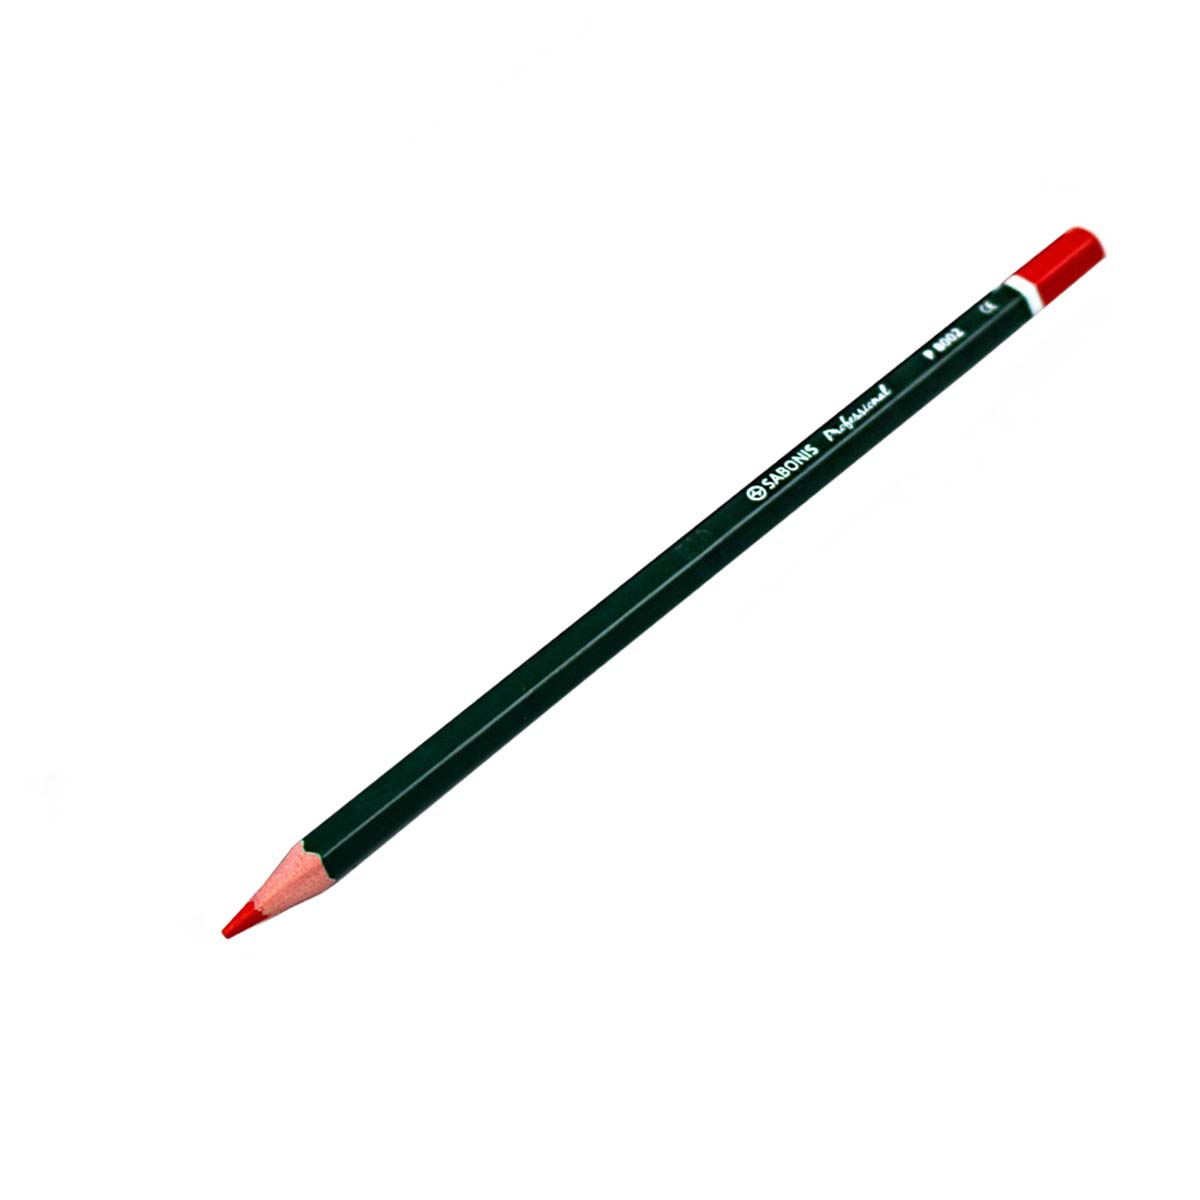 Unidad de Lápiz Rojo (cáscara verde) P8002A SABONIS